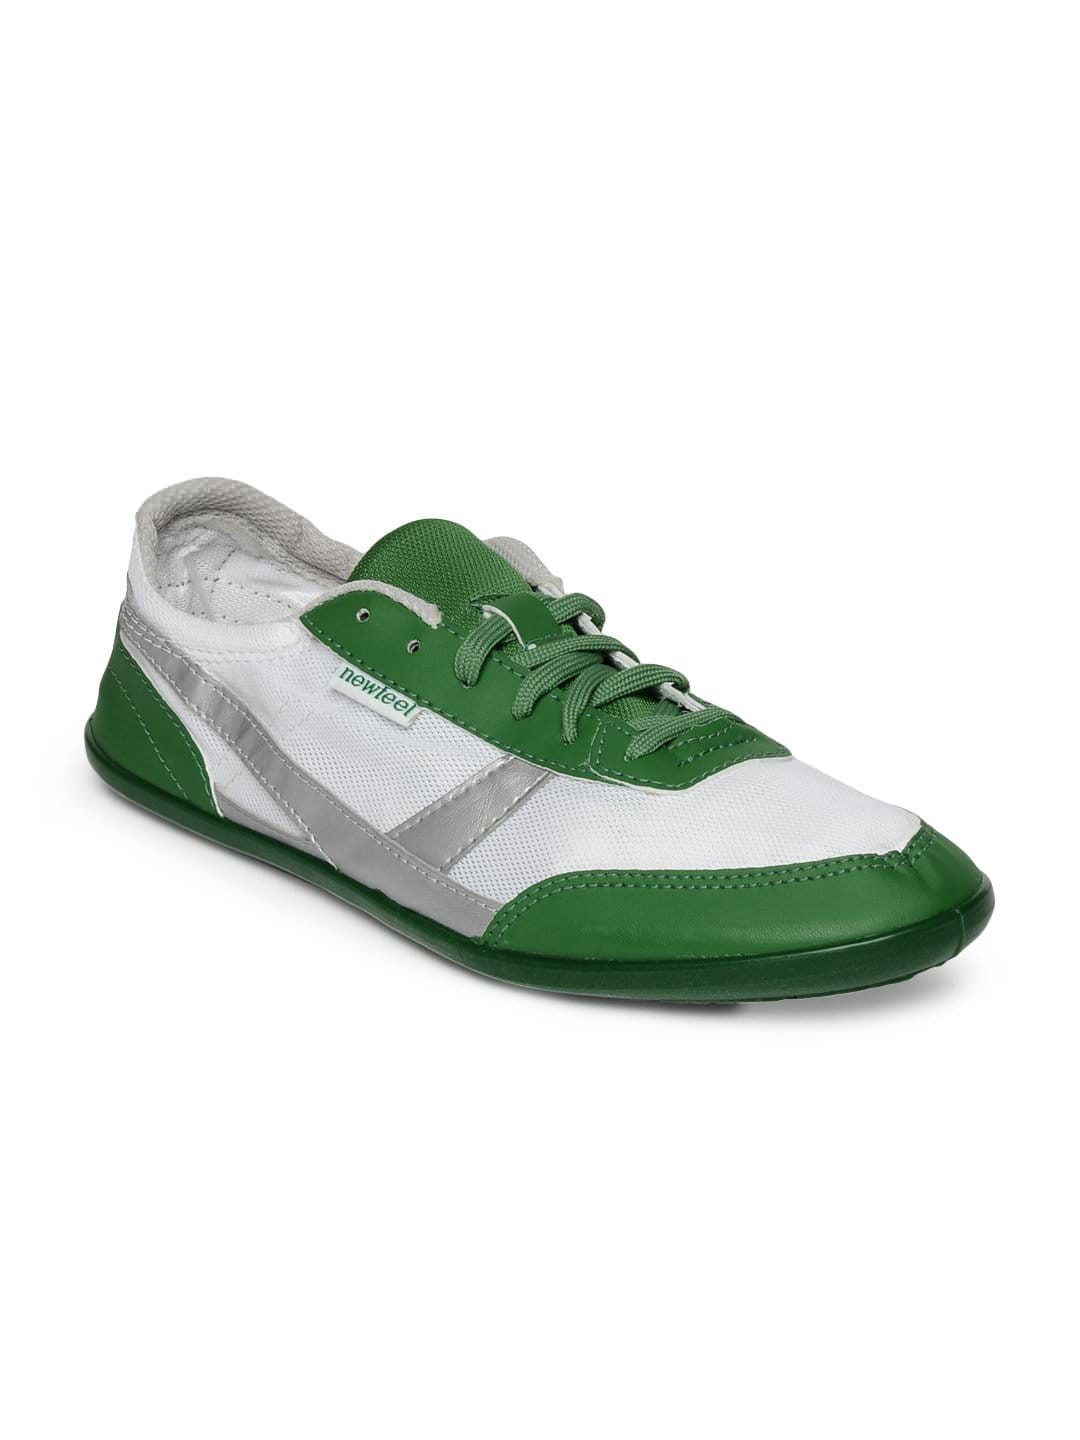 Newfeel Unisex Green Shoes